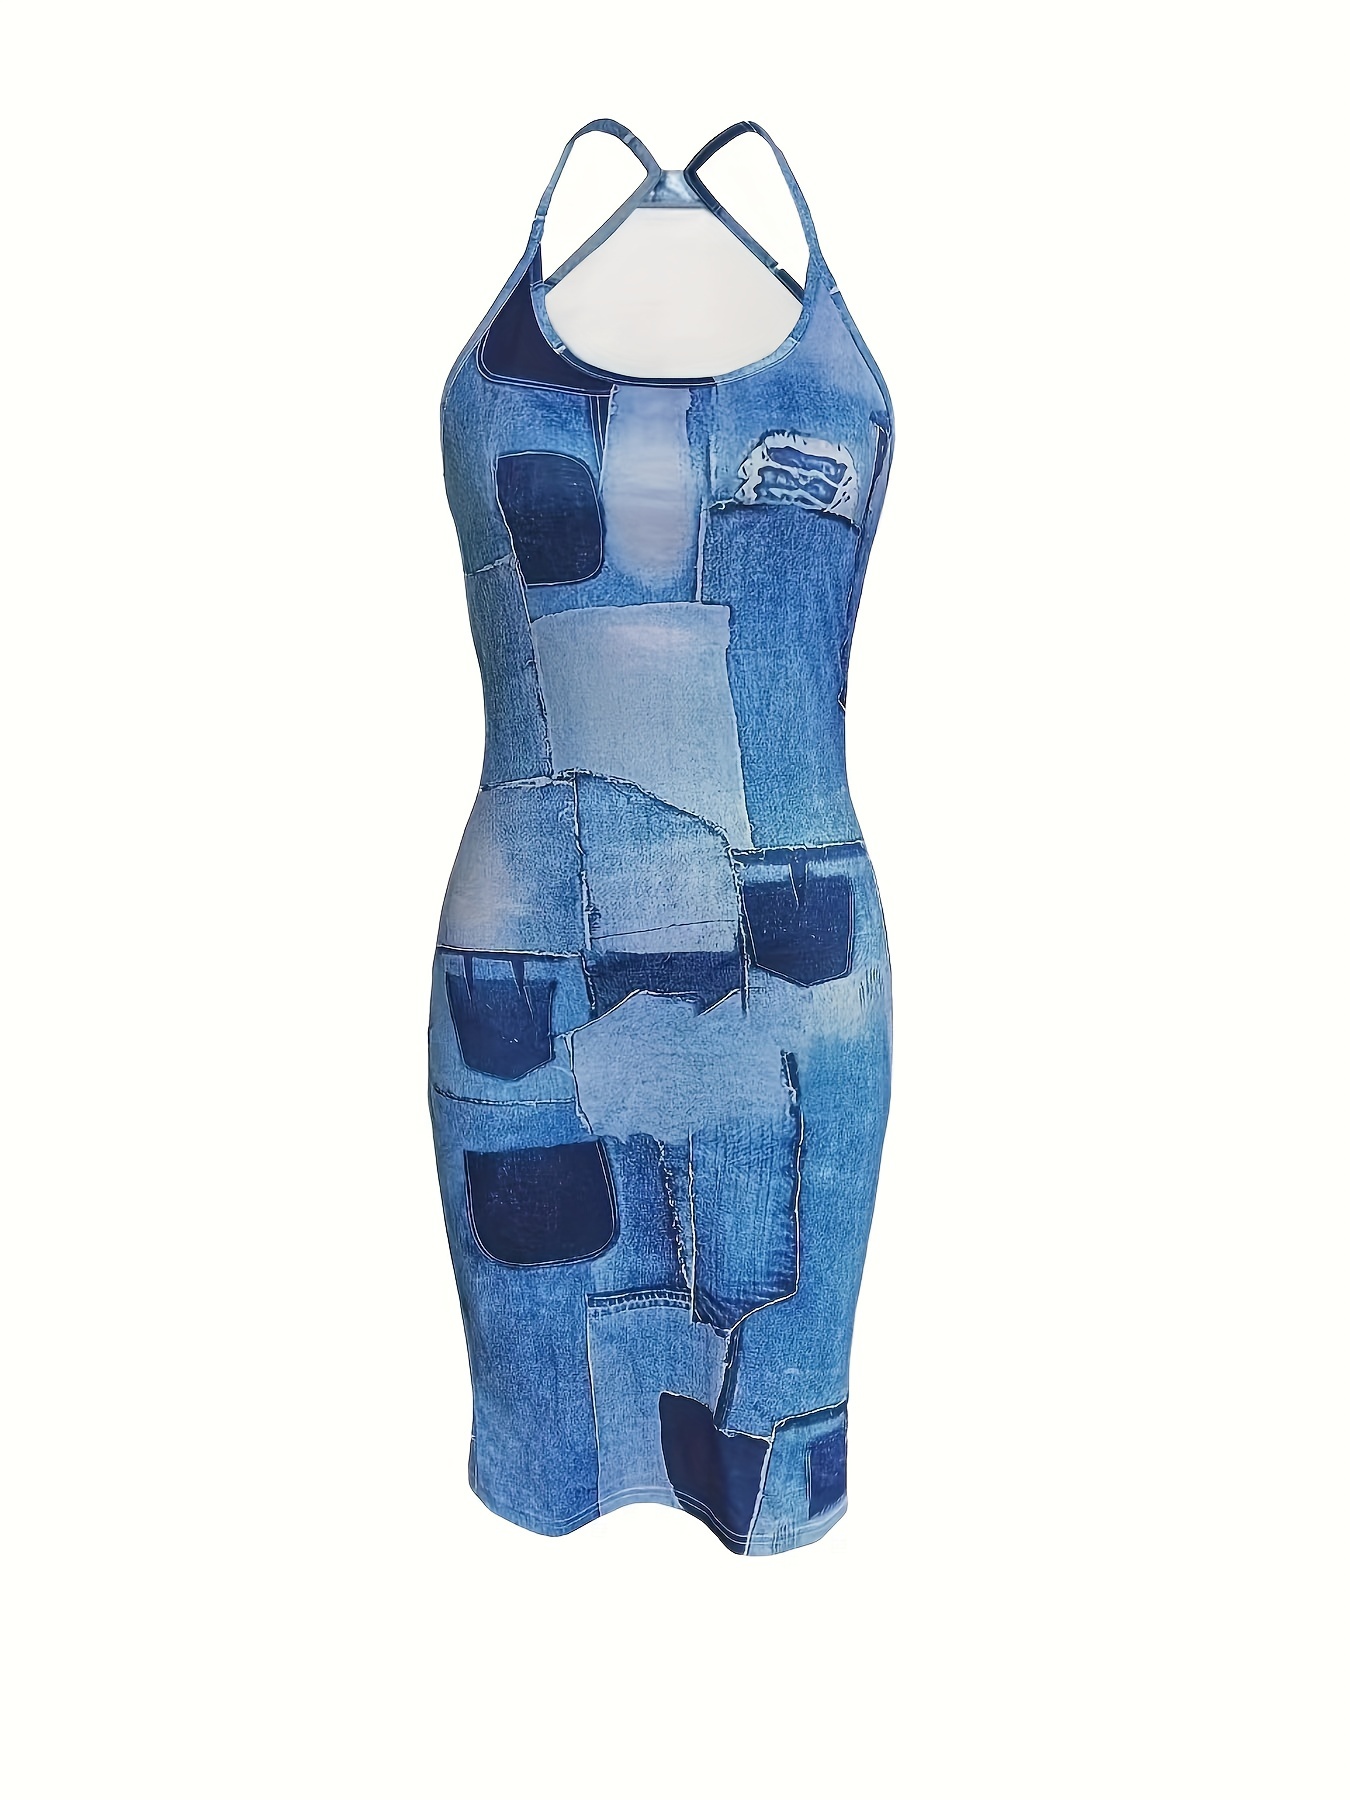 denim print spaghetti dress vintage sleeveless dress for spring summer womens clothing